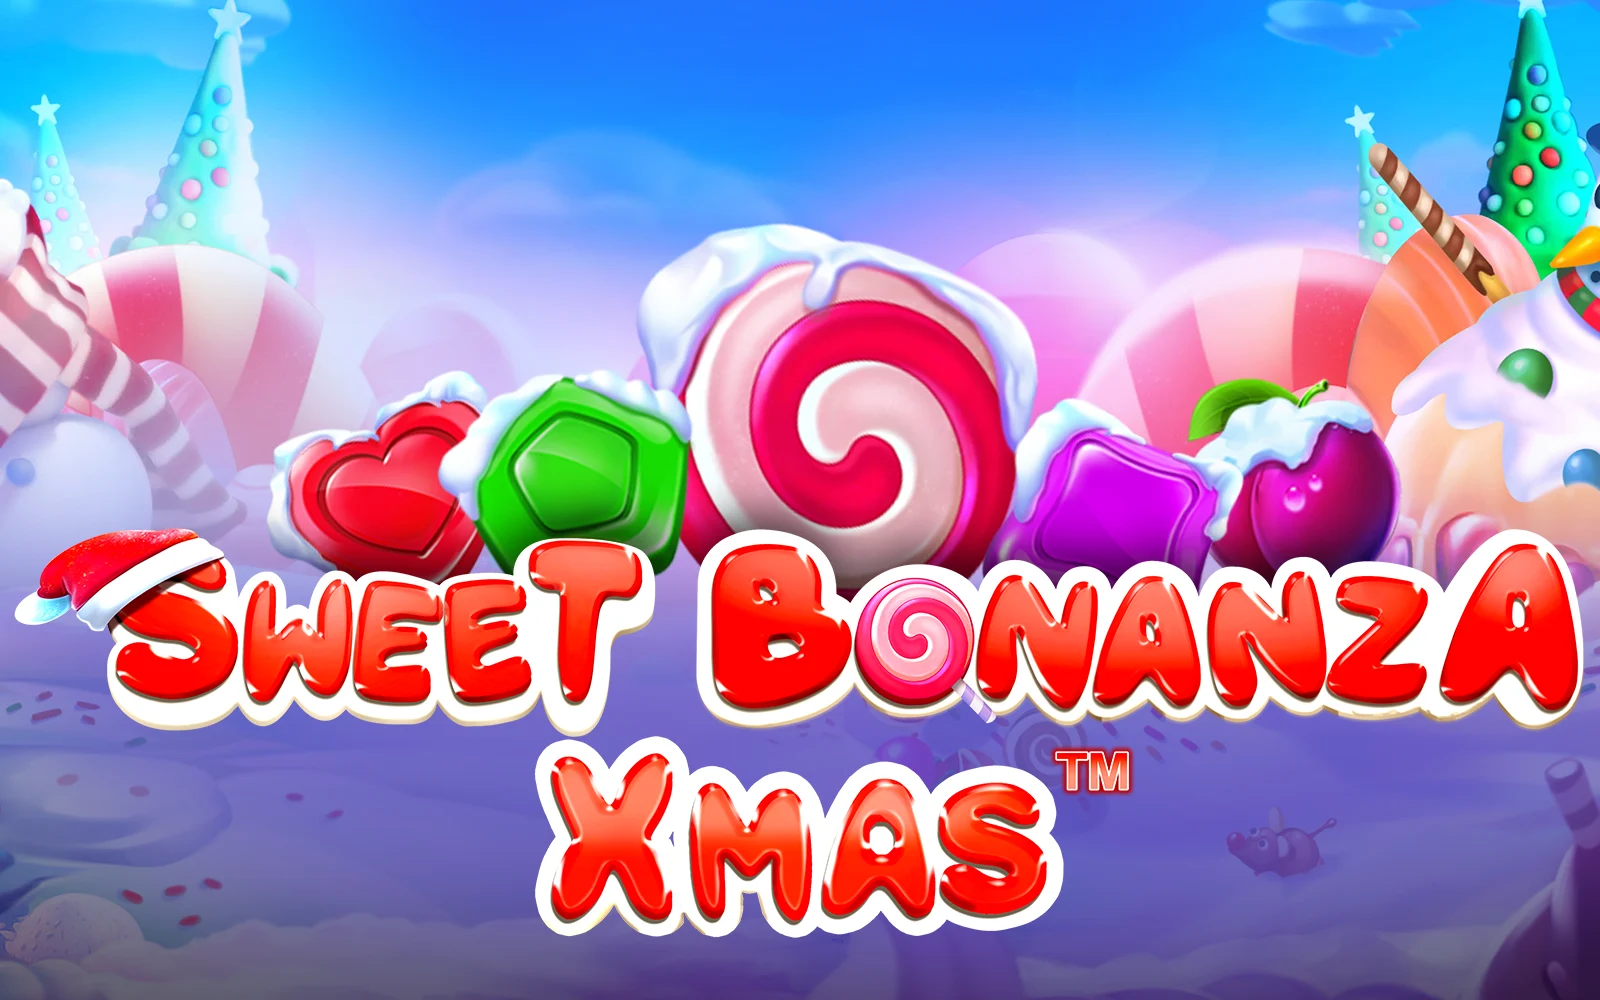 Играйте в Sweet Bonanza Xmas™ в онлайн-казино Starcasino.be